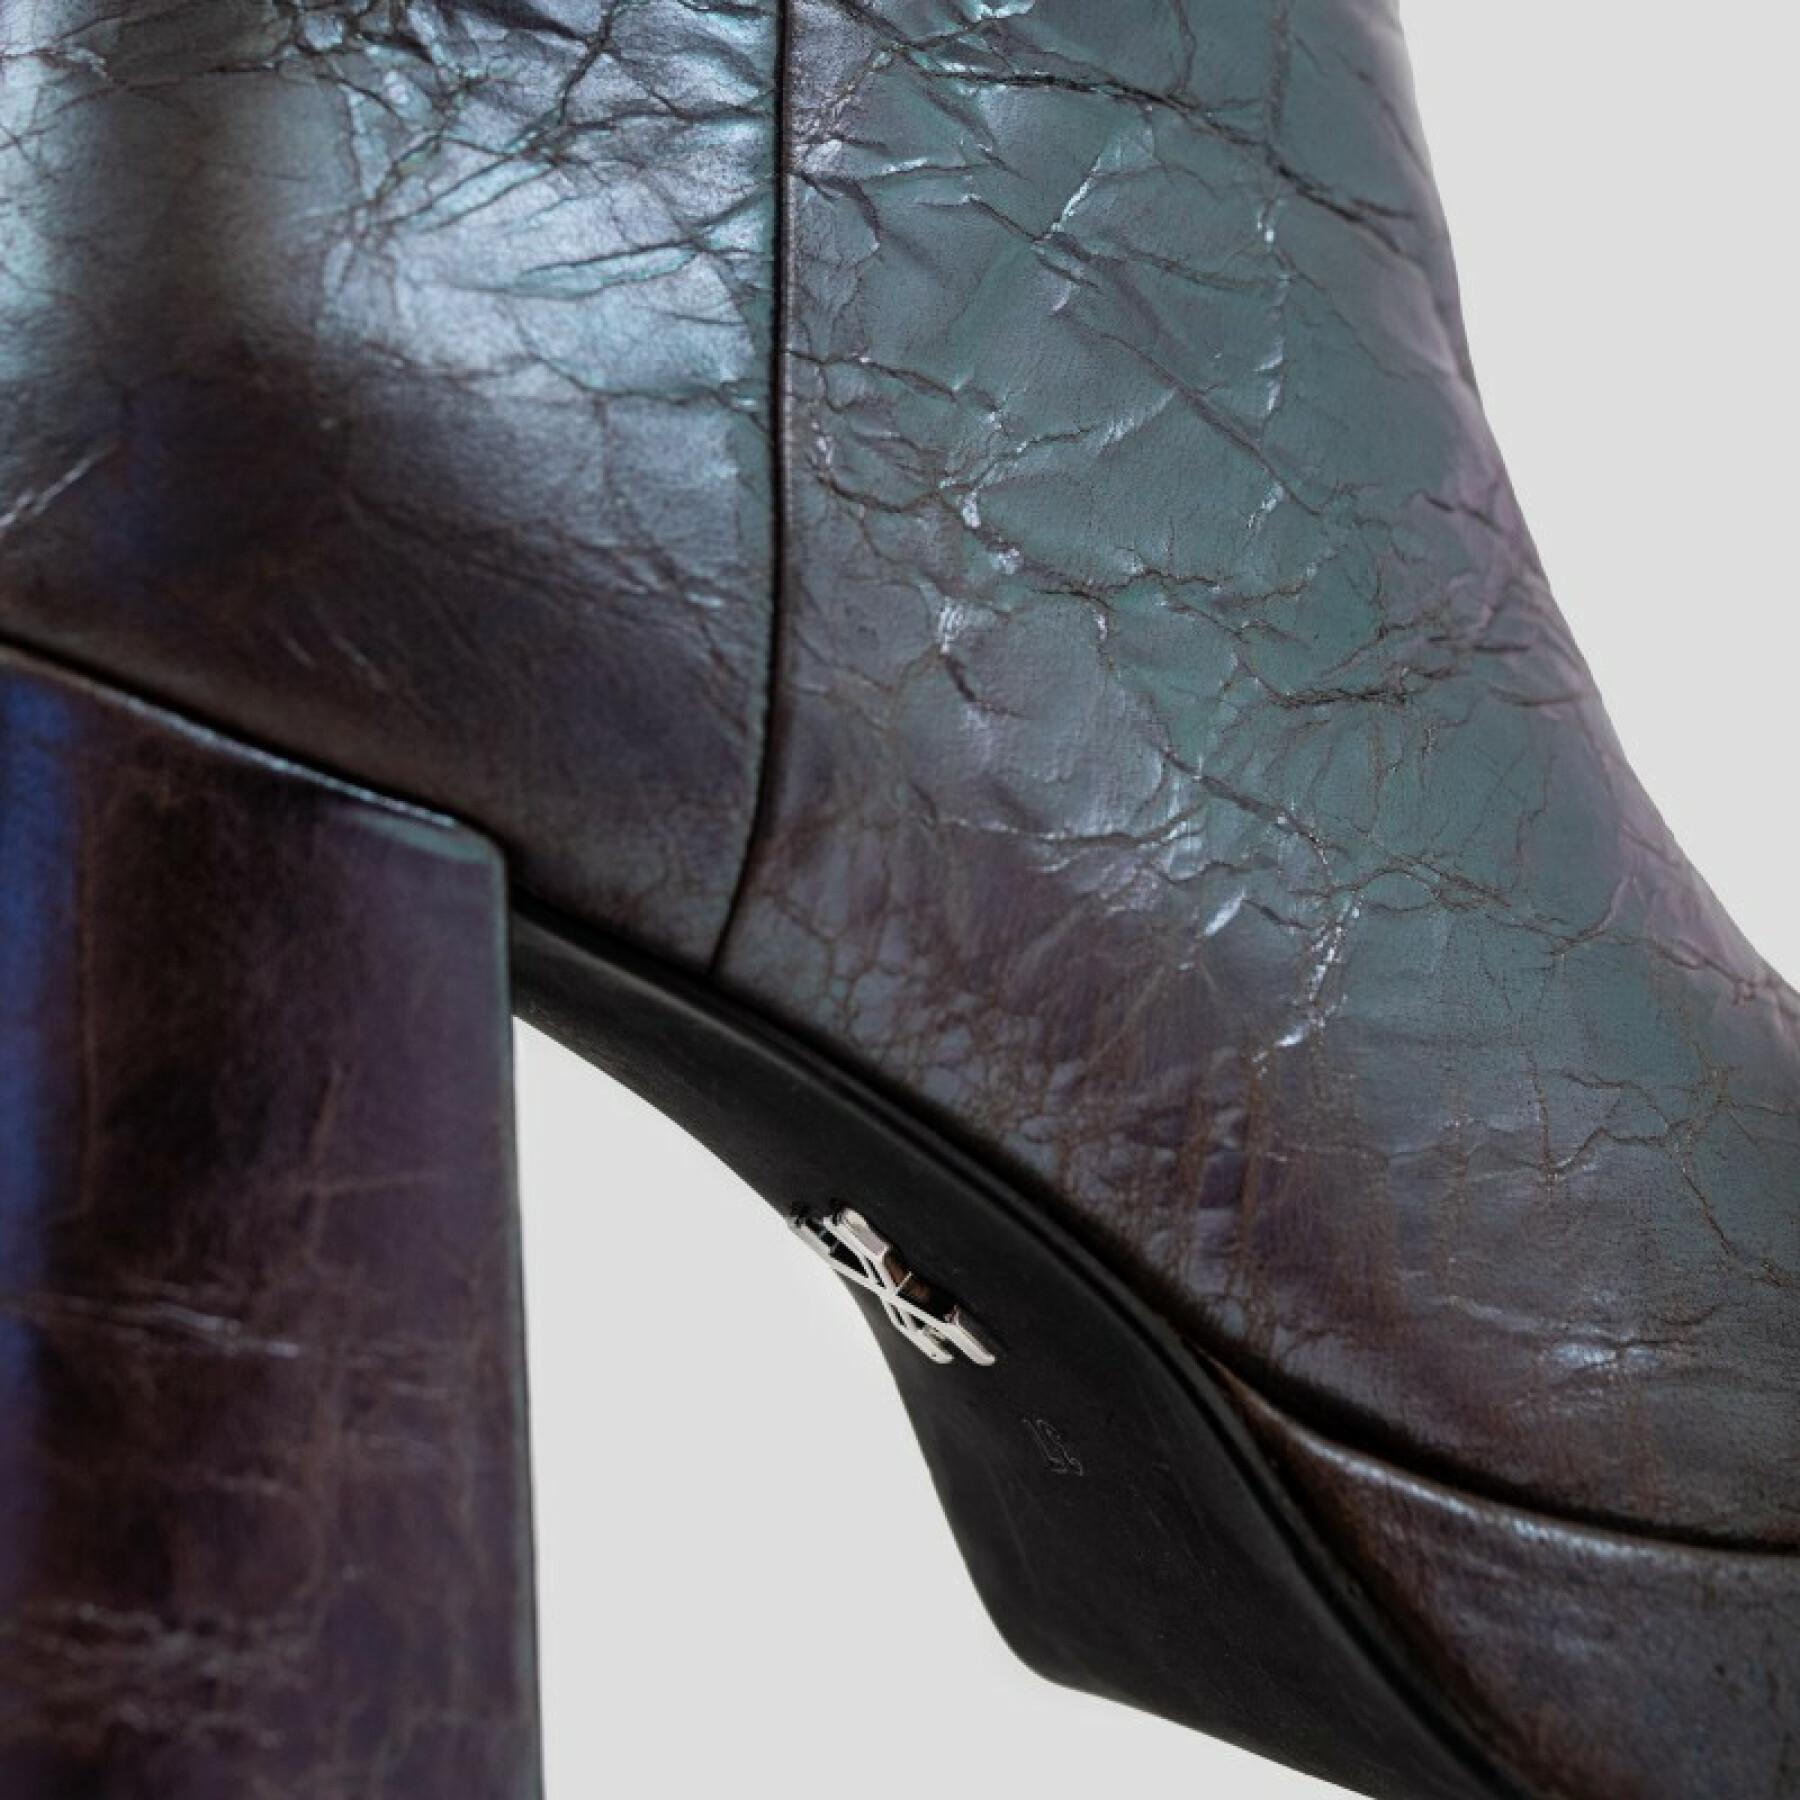 Women's boots Bronx New-Melanie metallic